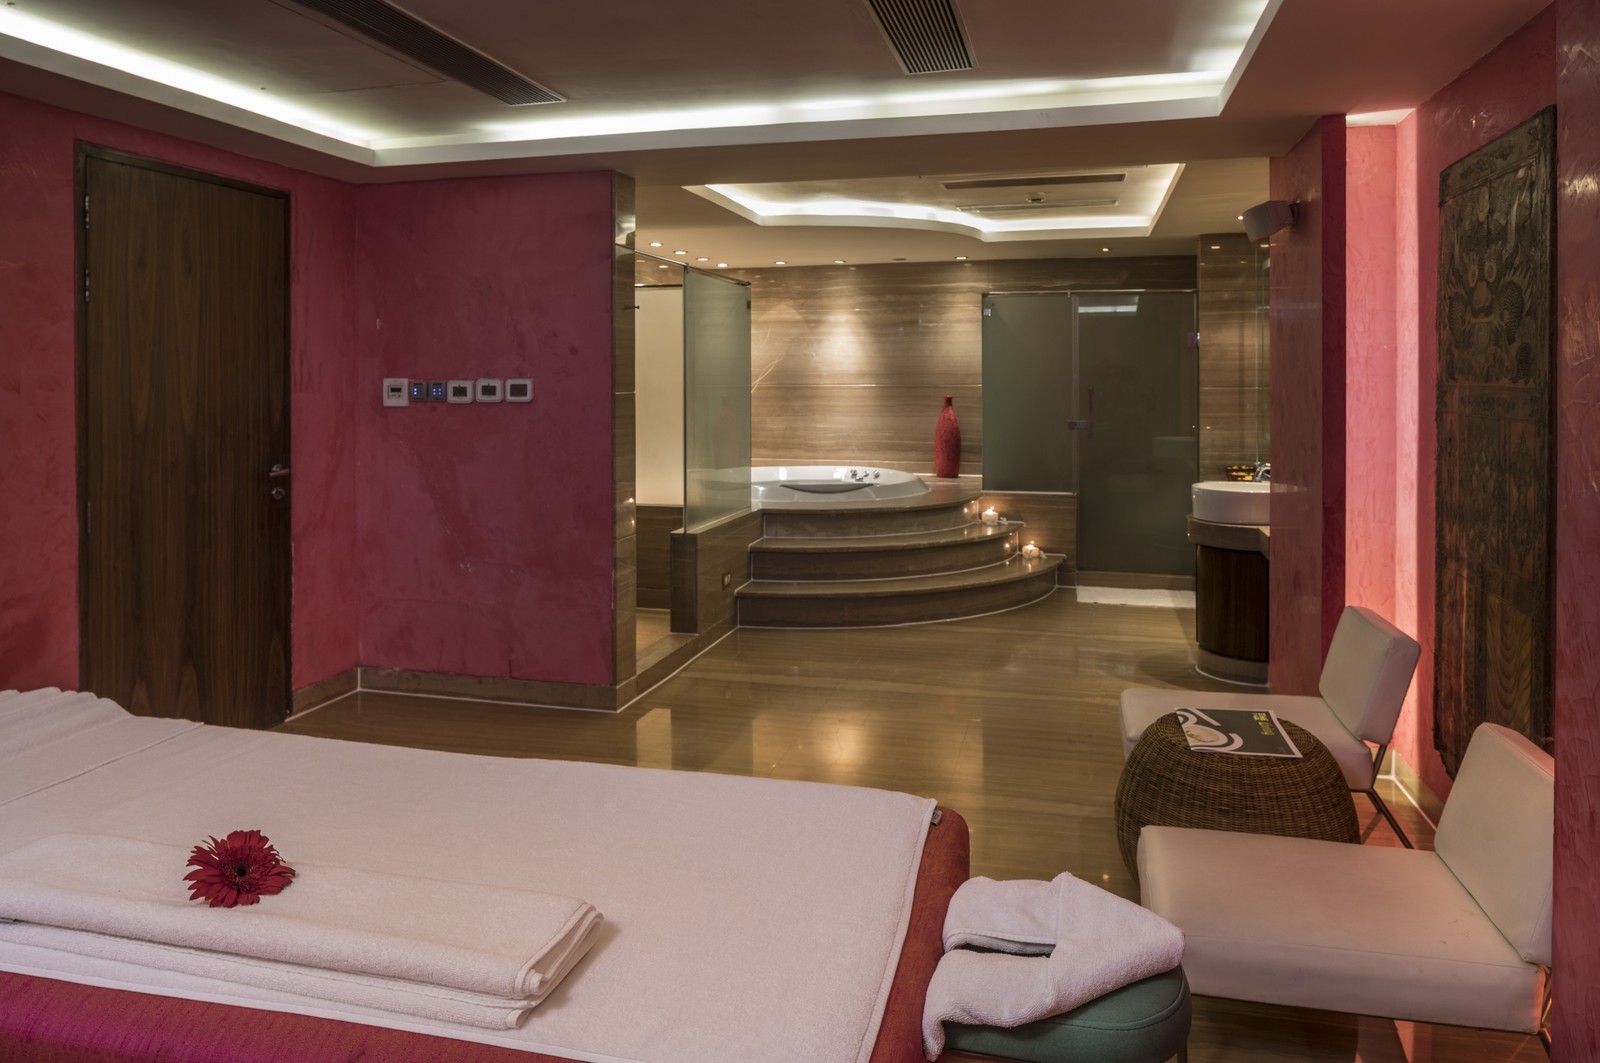 Interior of luxury aura spa room with bathtub at The park hotel kolkata